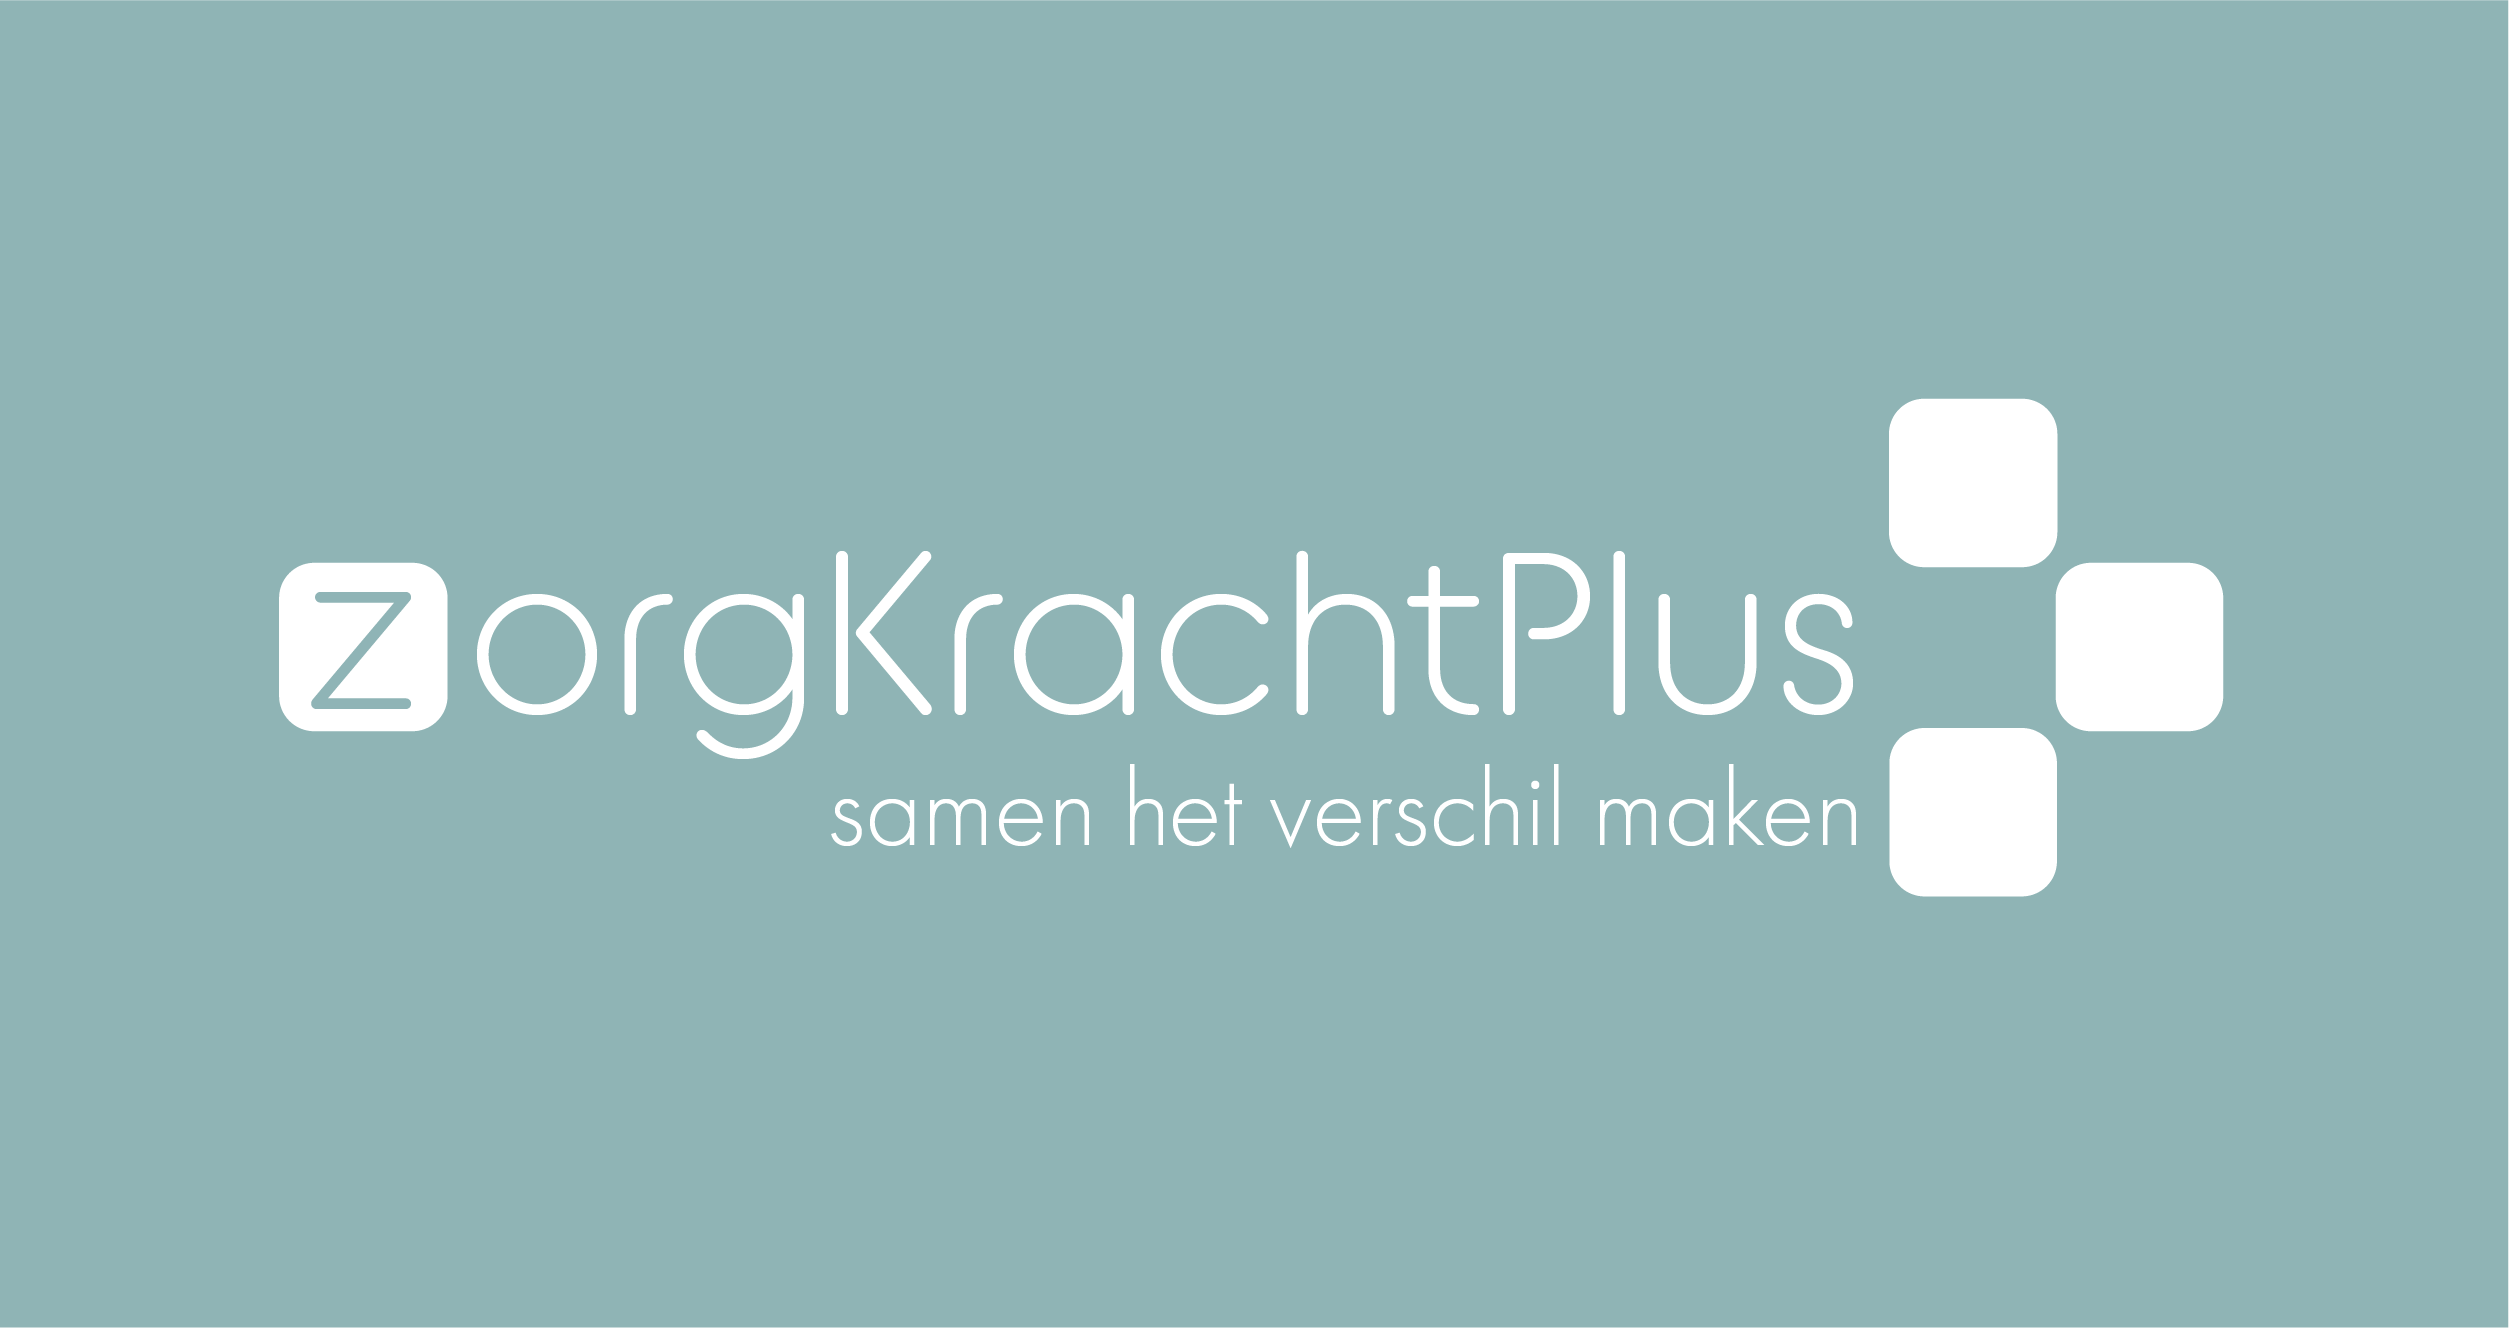 Zorgkrachtplus logo